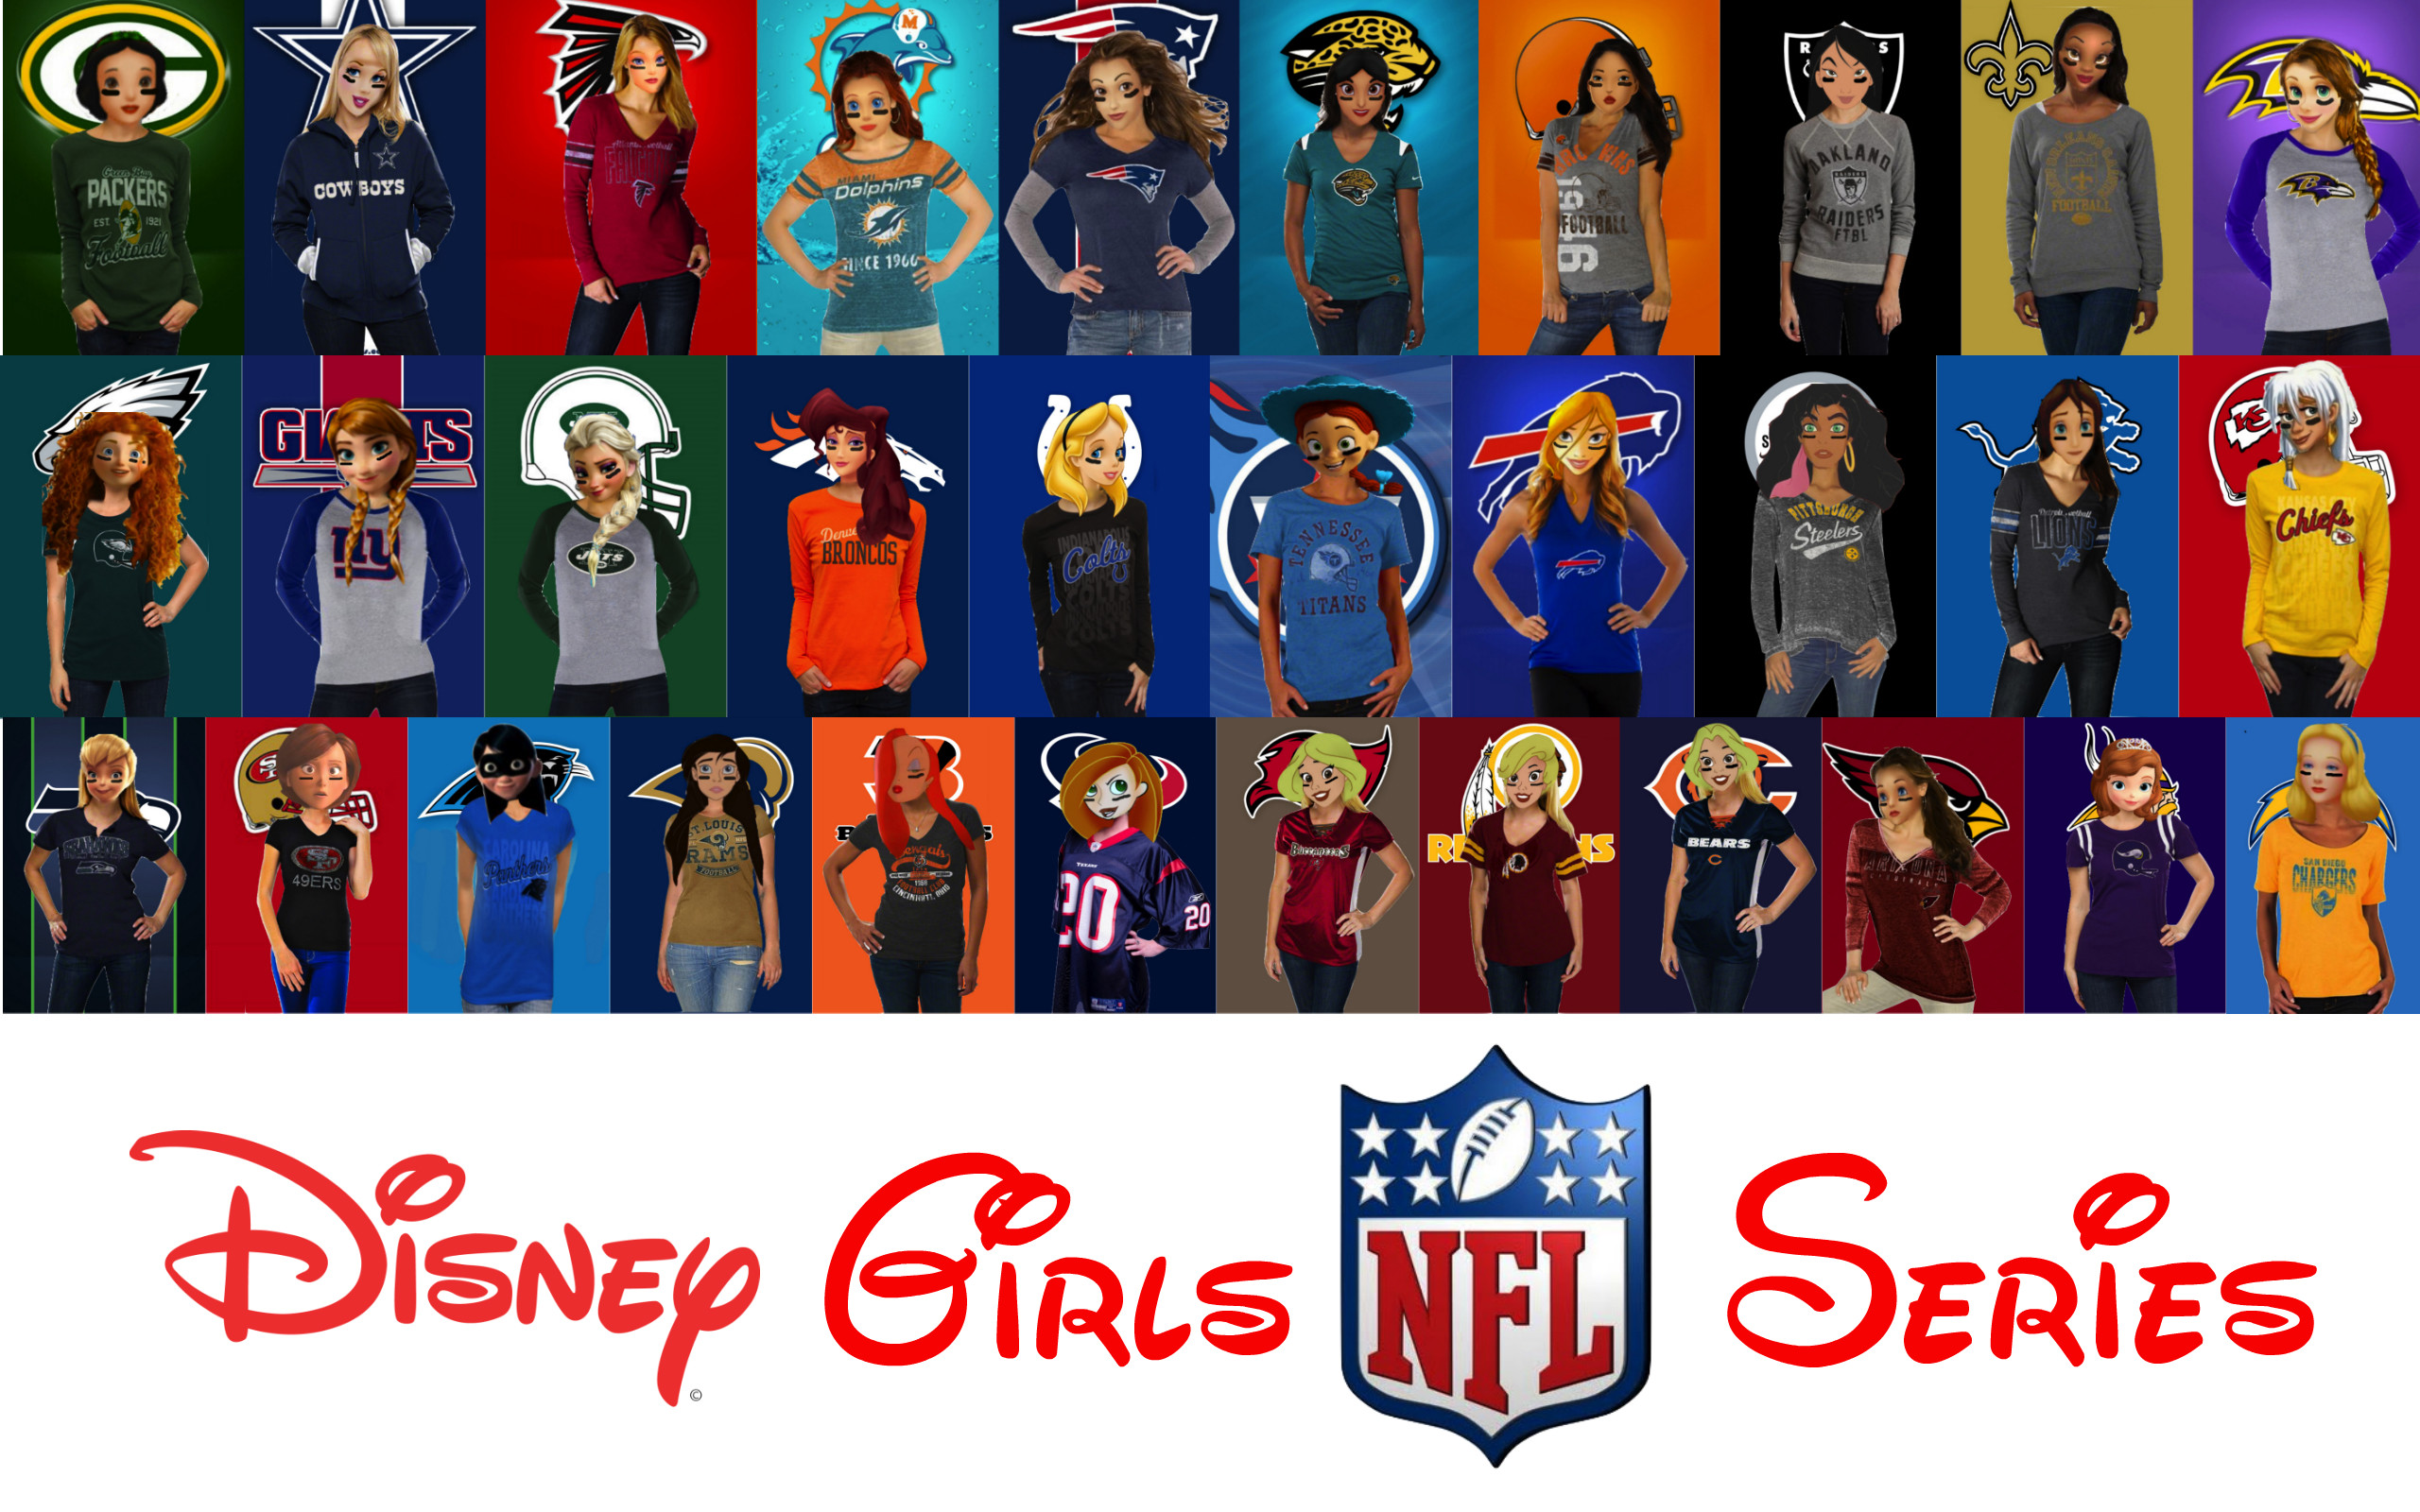 2560x1600 All Nfl Teams Wallpaper Disney girls nfl series poster